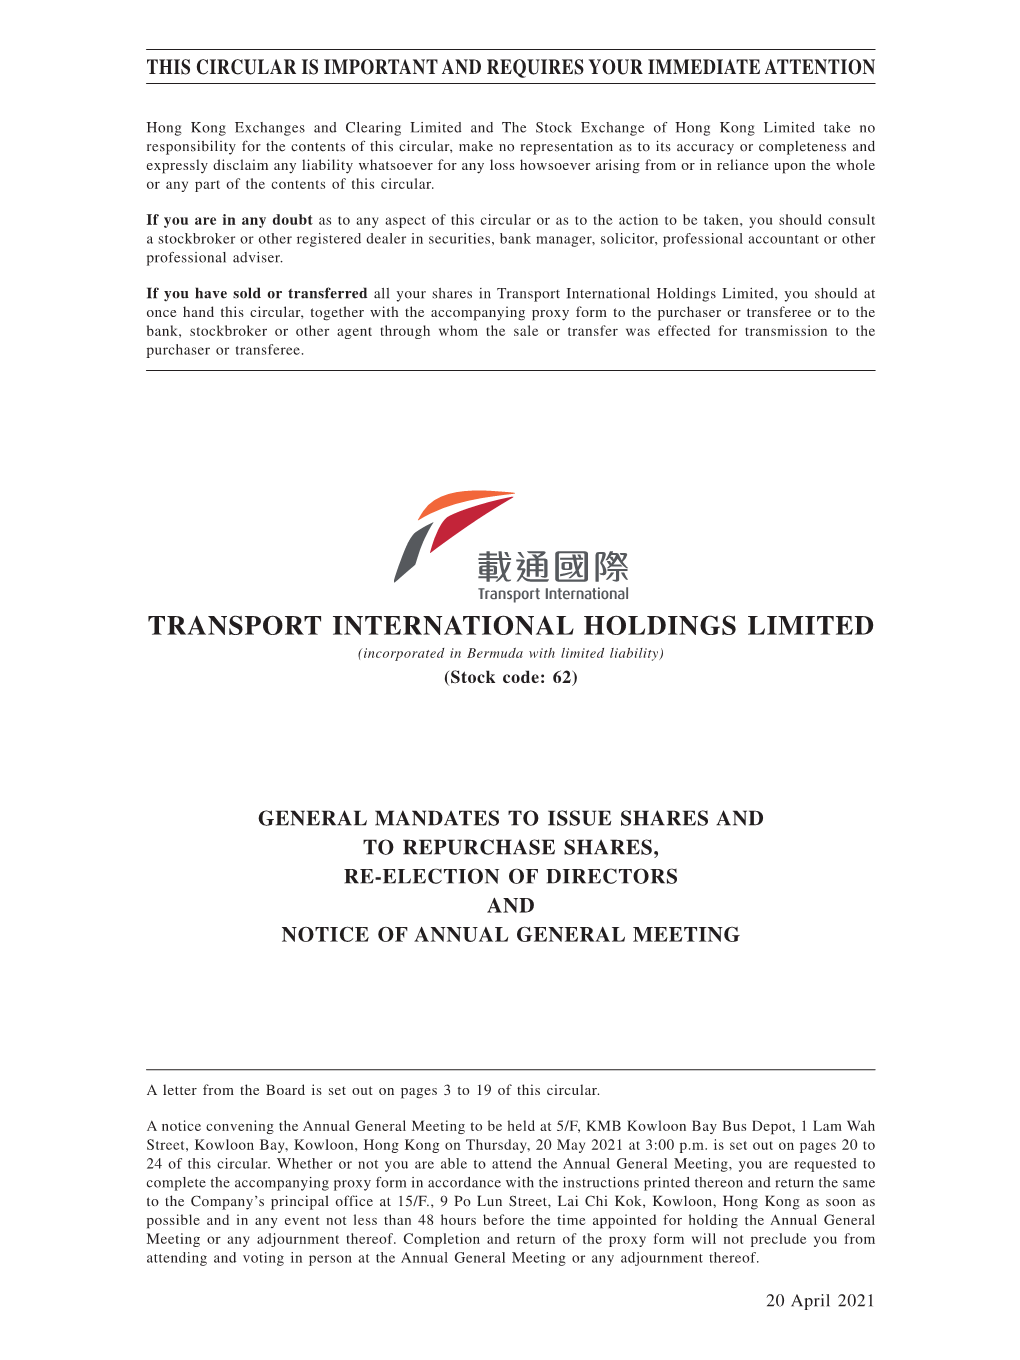 Transport International Holdings Limited